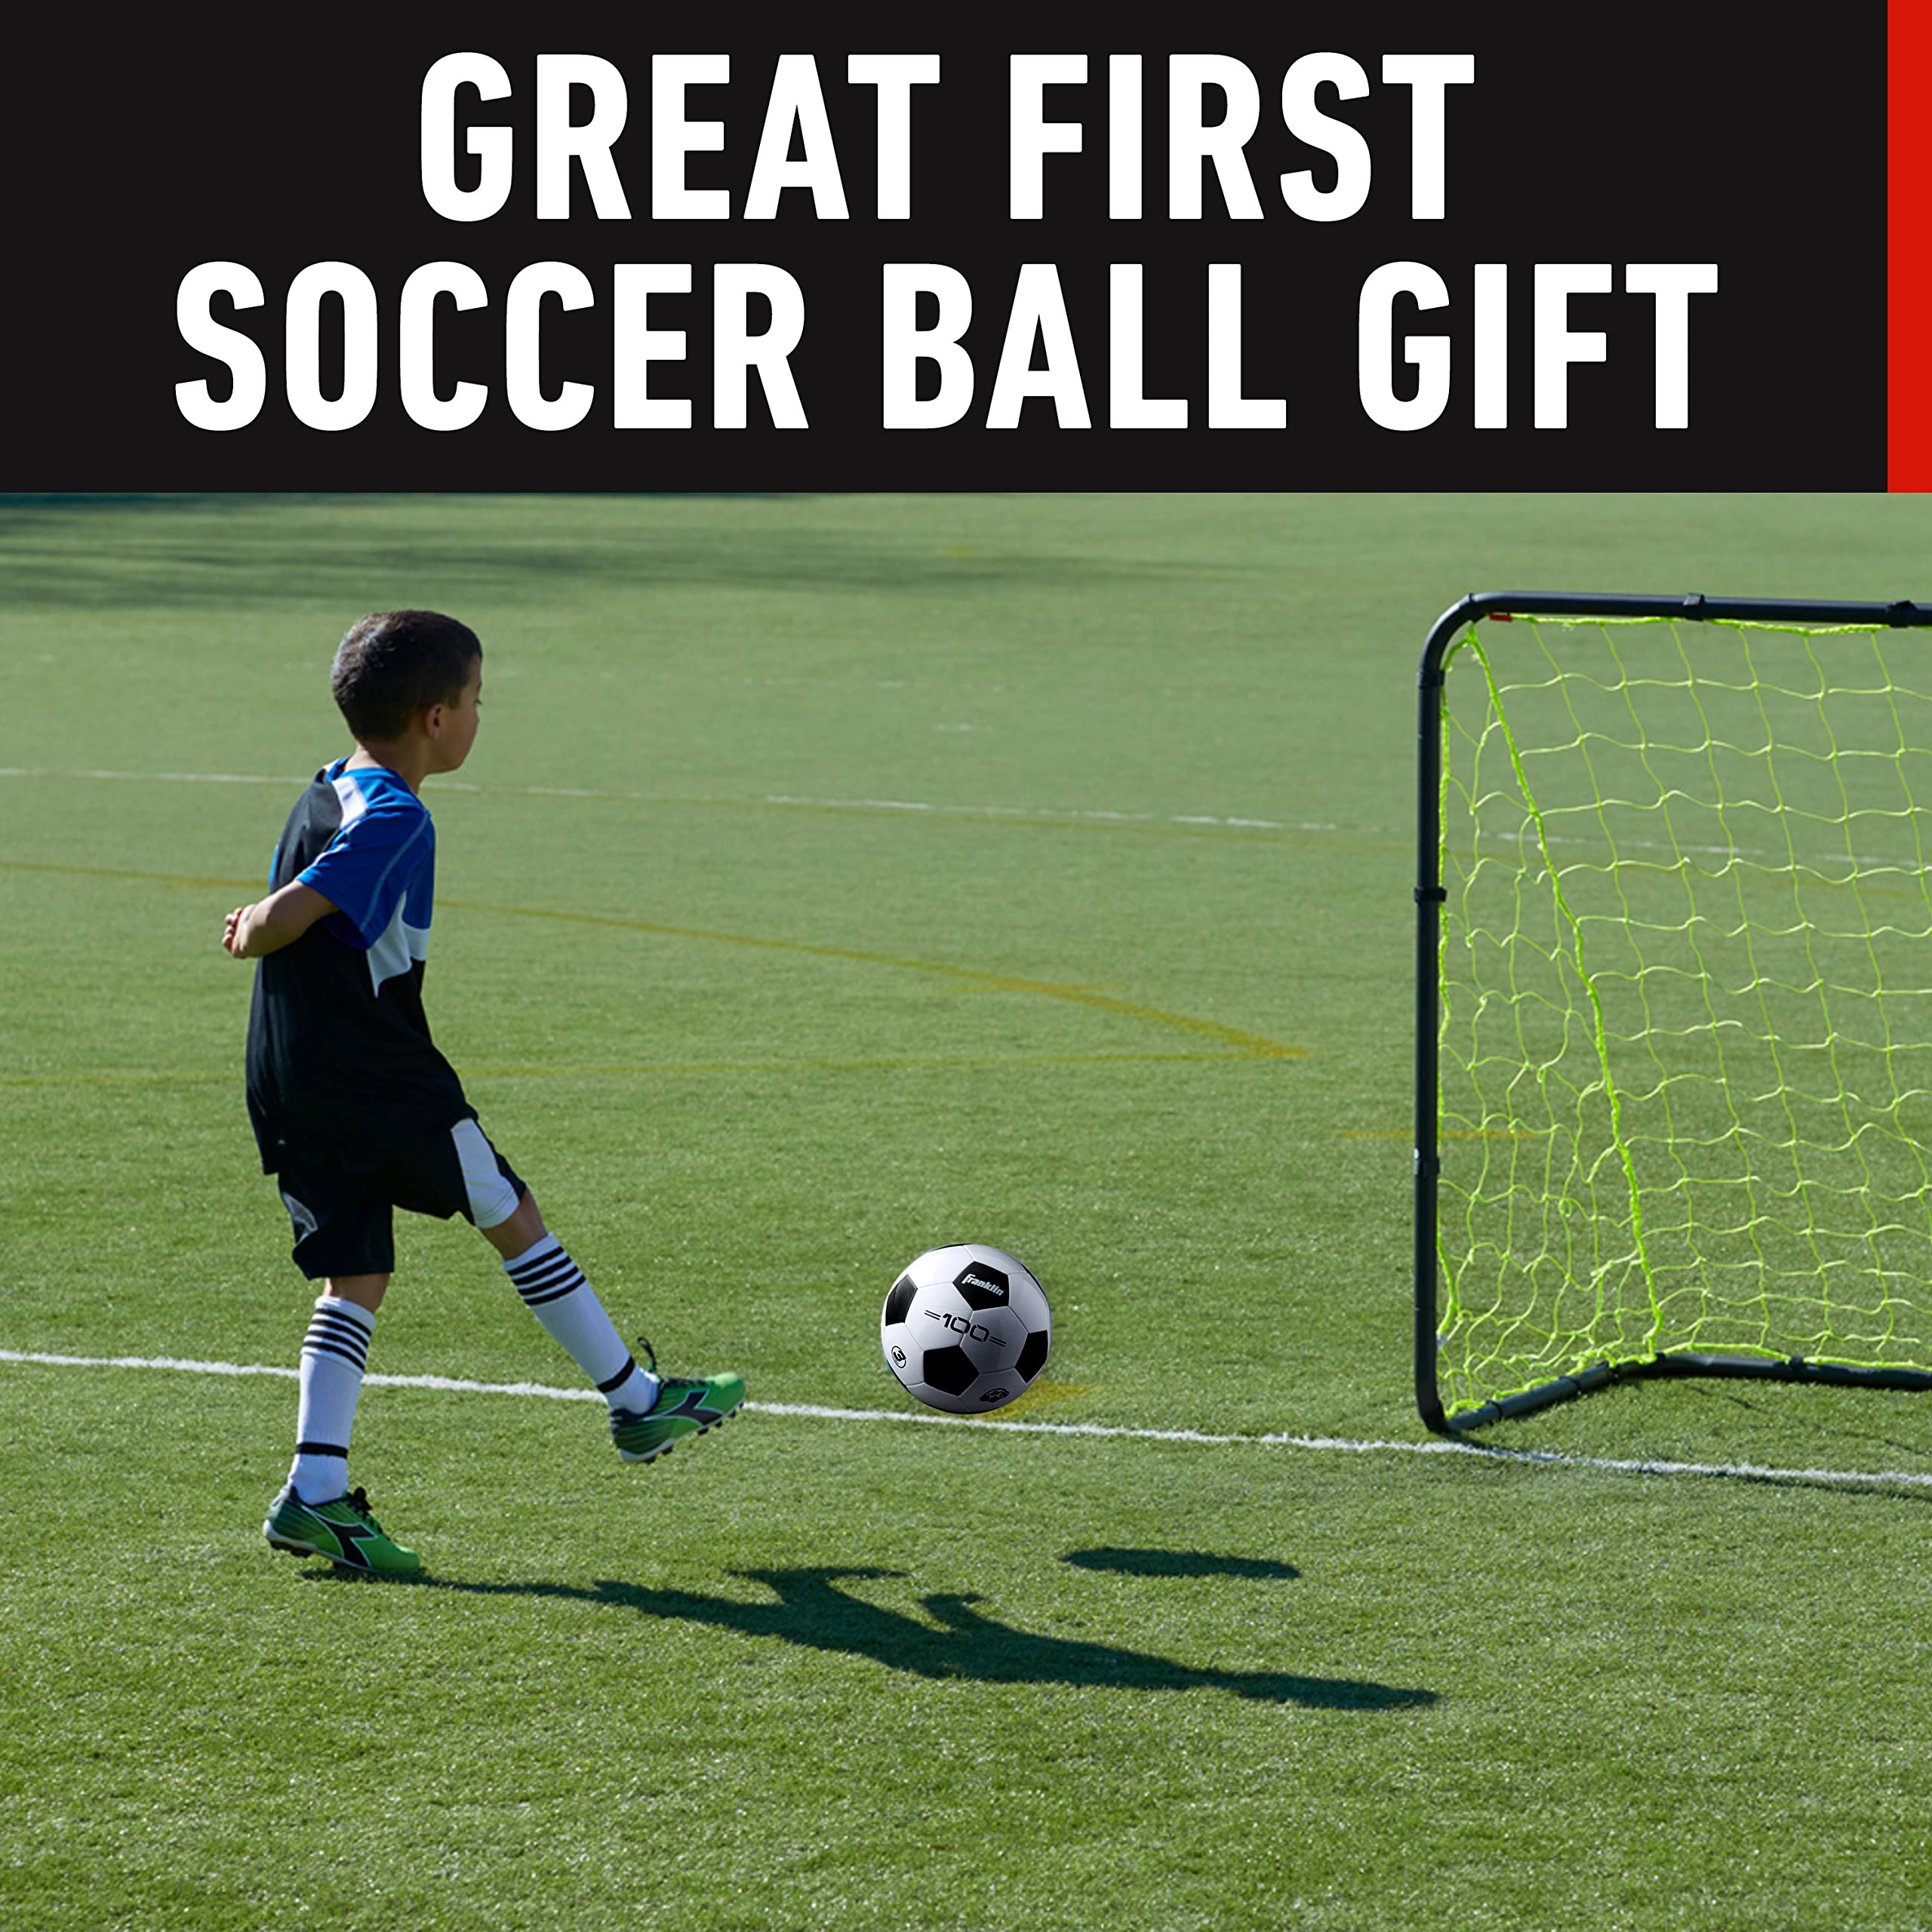 Franklin Sports Soccer Balls - Competition 100 Youth + Adult Soccer Balls - Size 3, Size 4 + Size 5 Traditional Soccer Balls - Single + 12 Ball Bulk Packs - Black + White